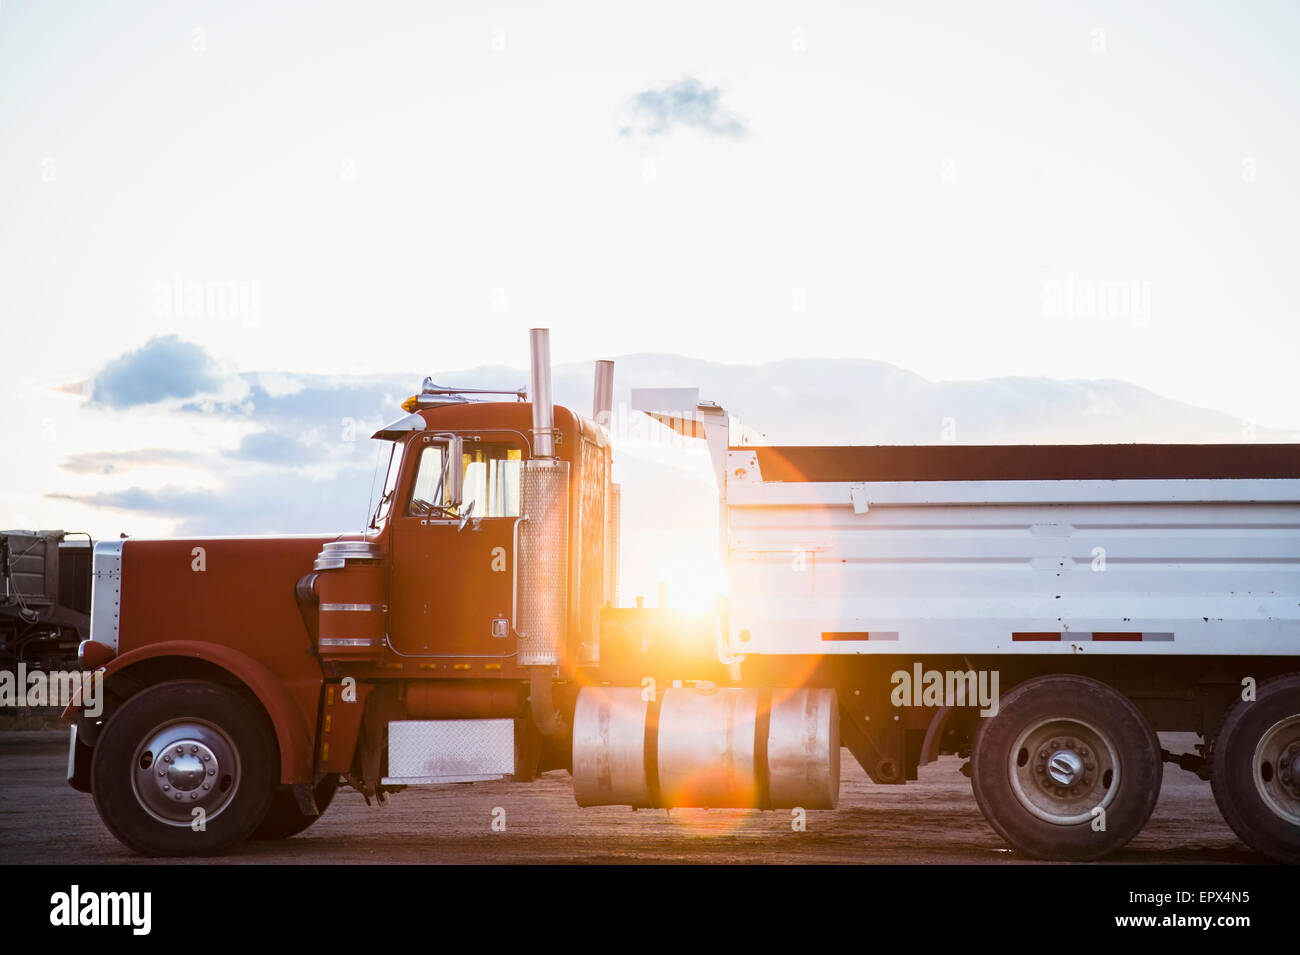 USA, Colorado, Red semi-truck on road Stock Photo